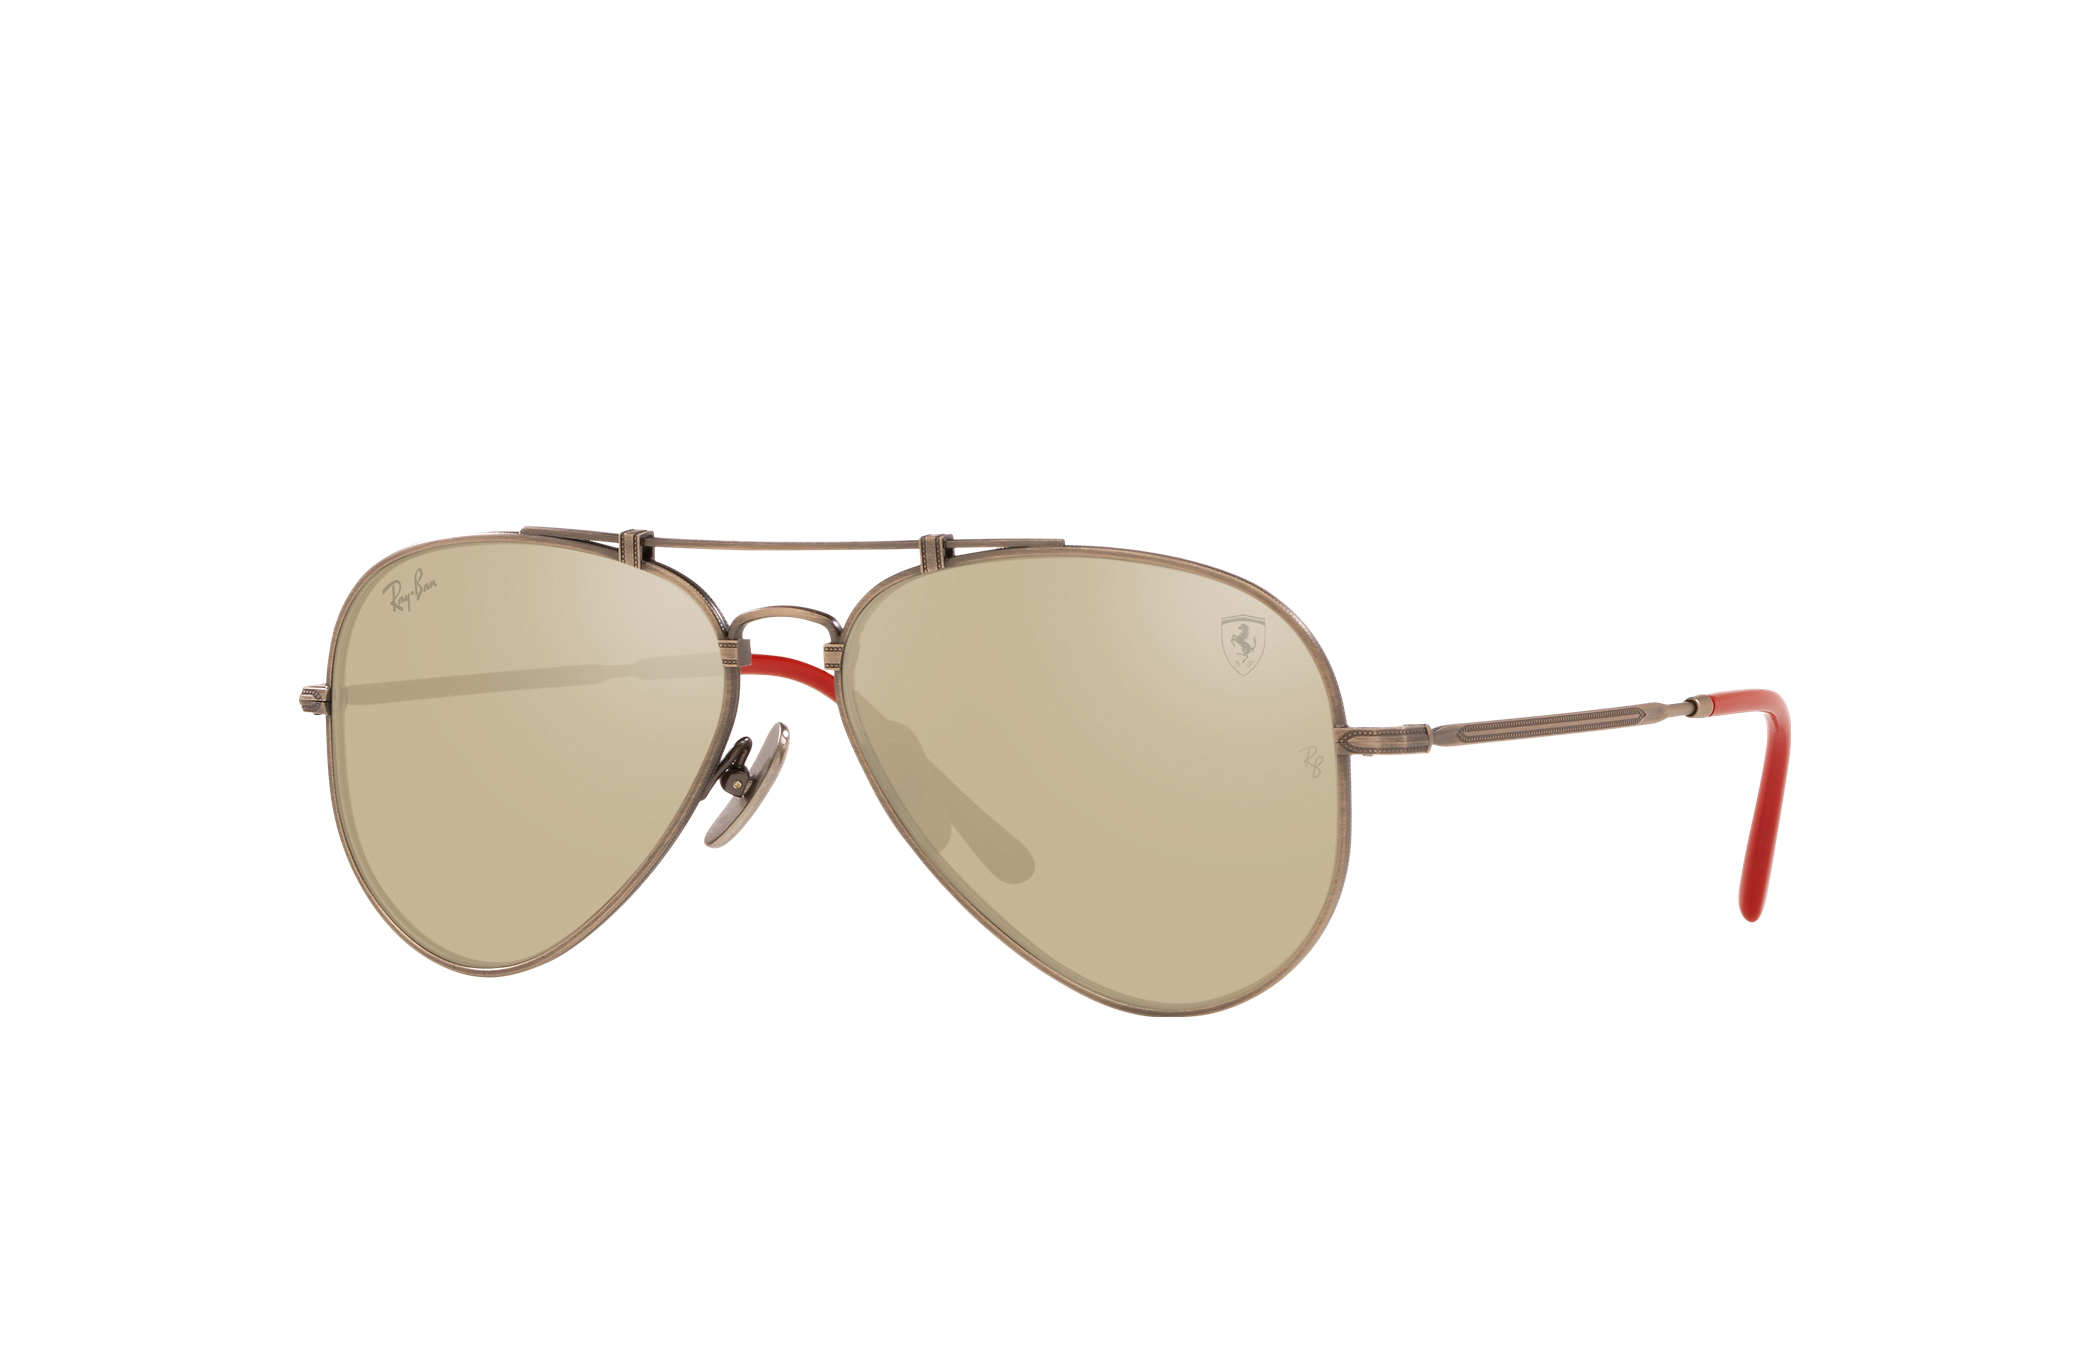 Rb8125m Scuderia Ferrari Italy Limited Edition Sunglasses in Gunmetal and  White Gold | Ray-Ban®